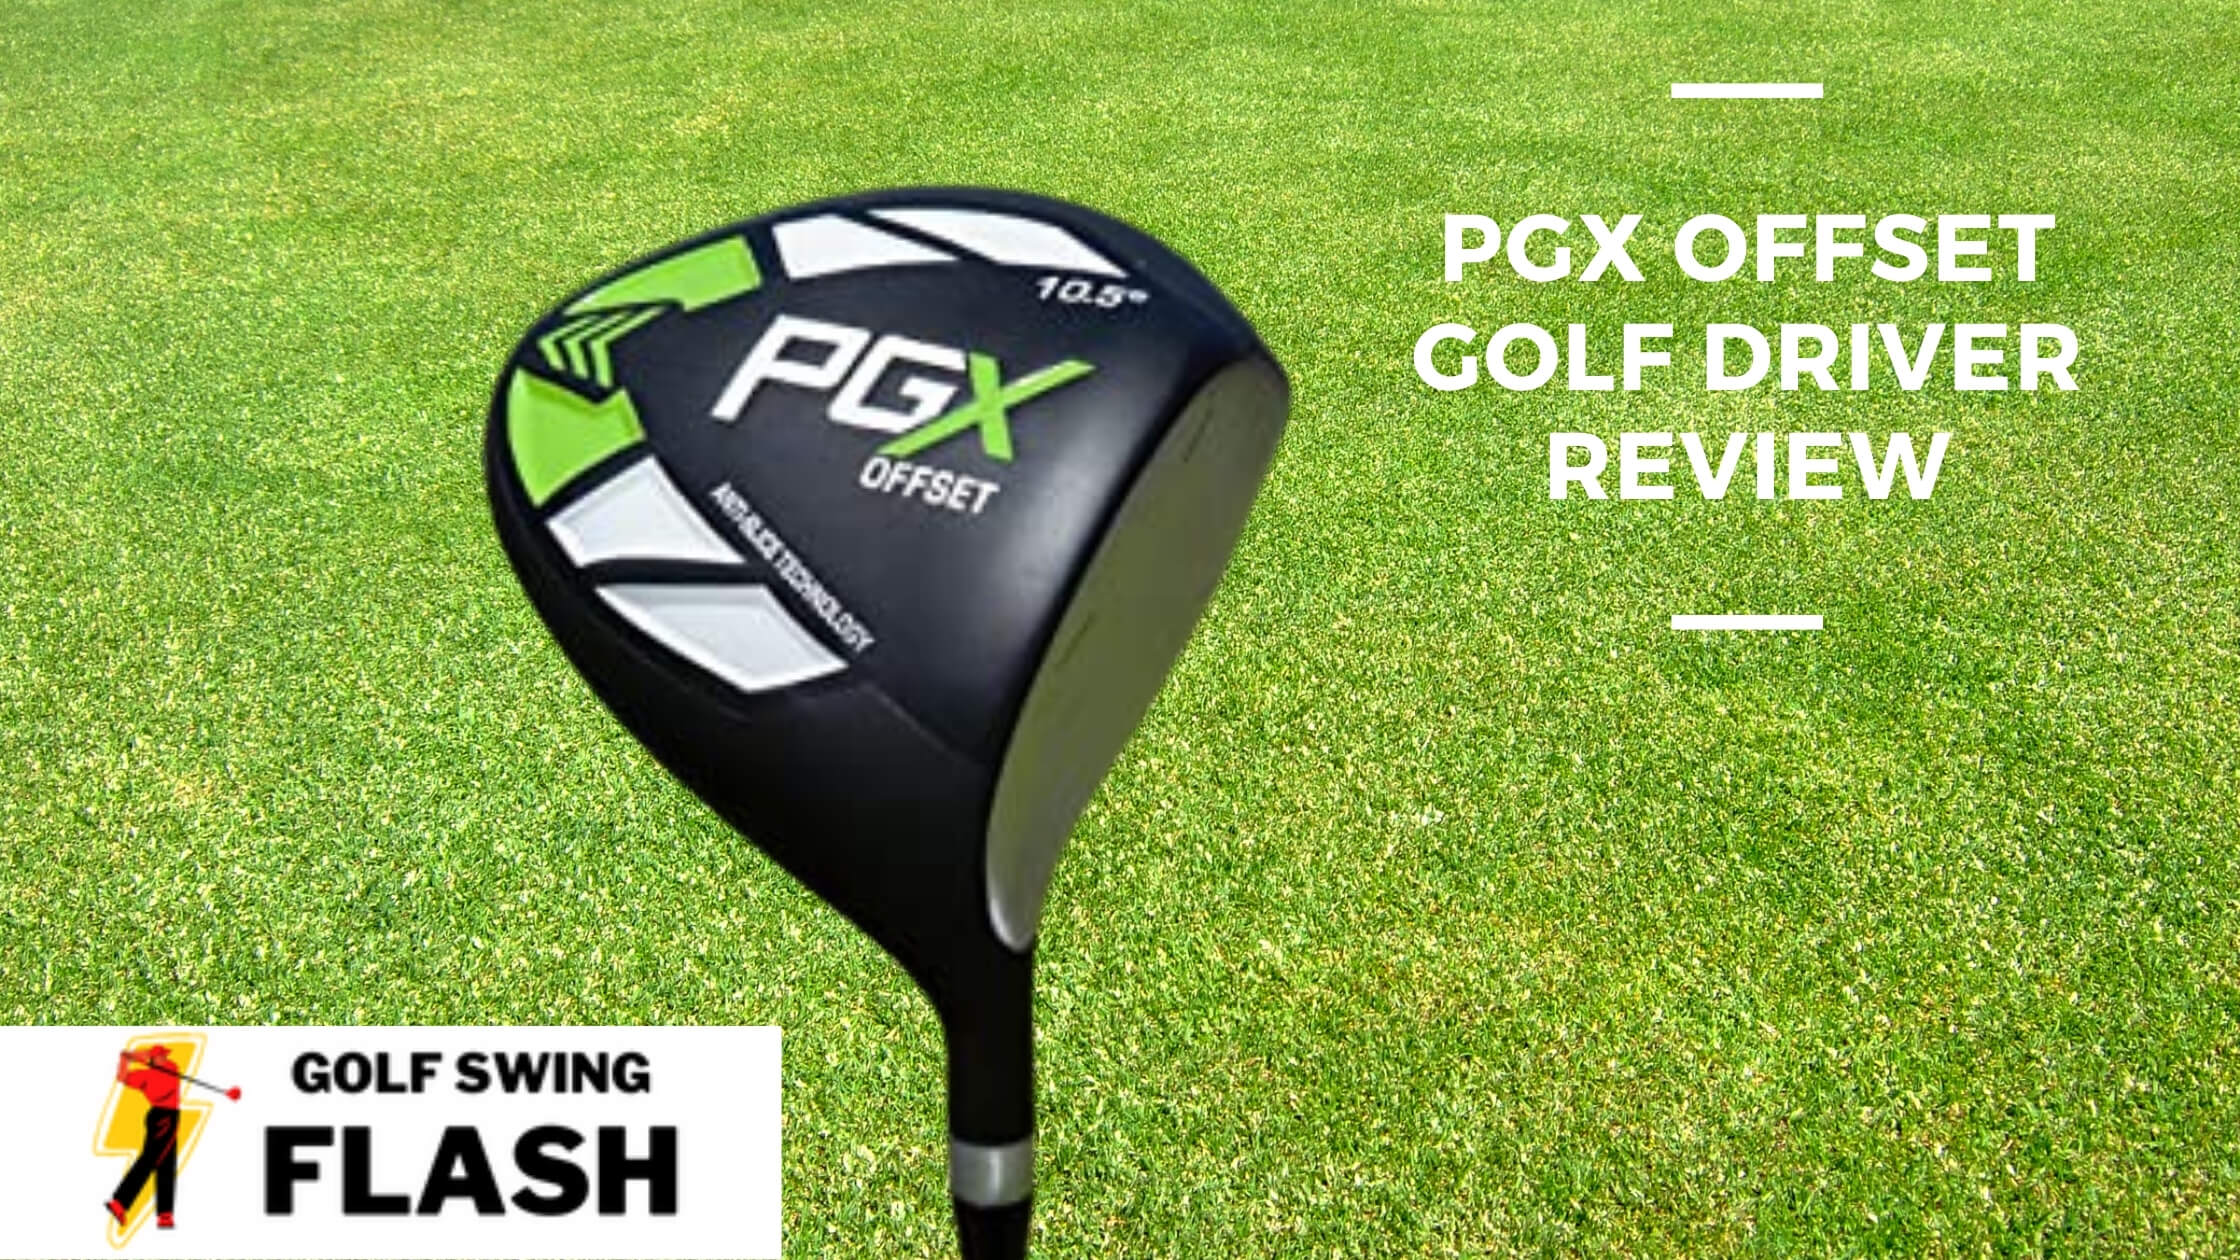 PGX Offset Golf Driver Review